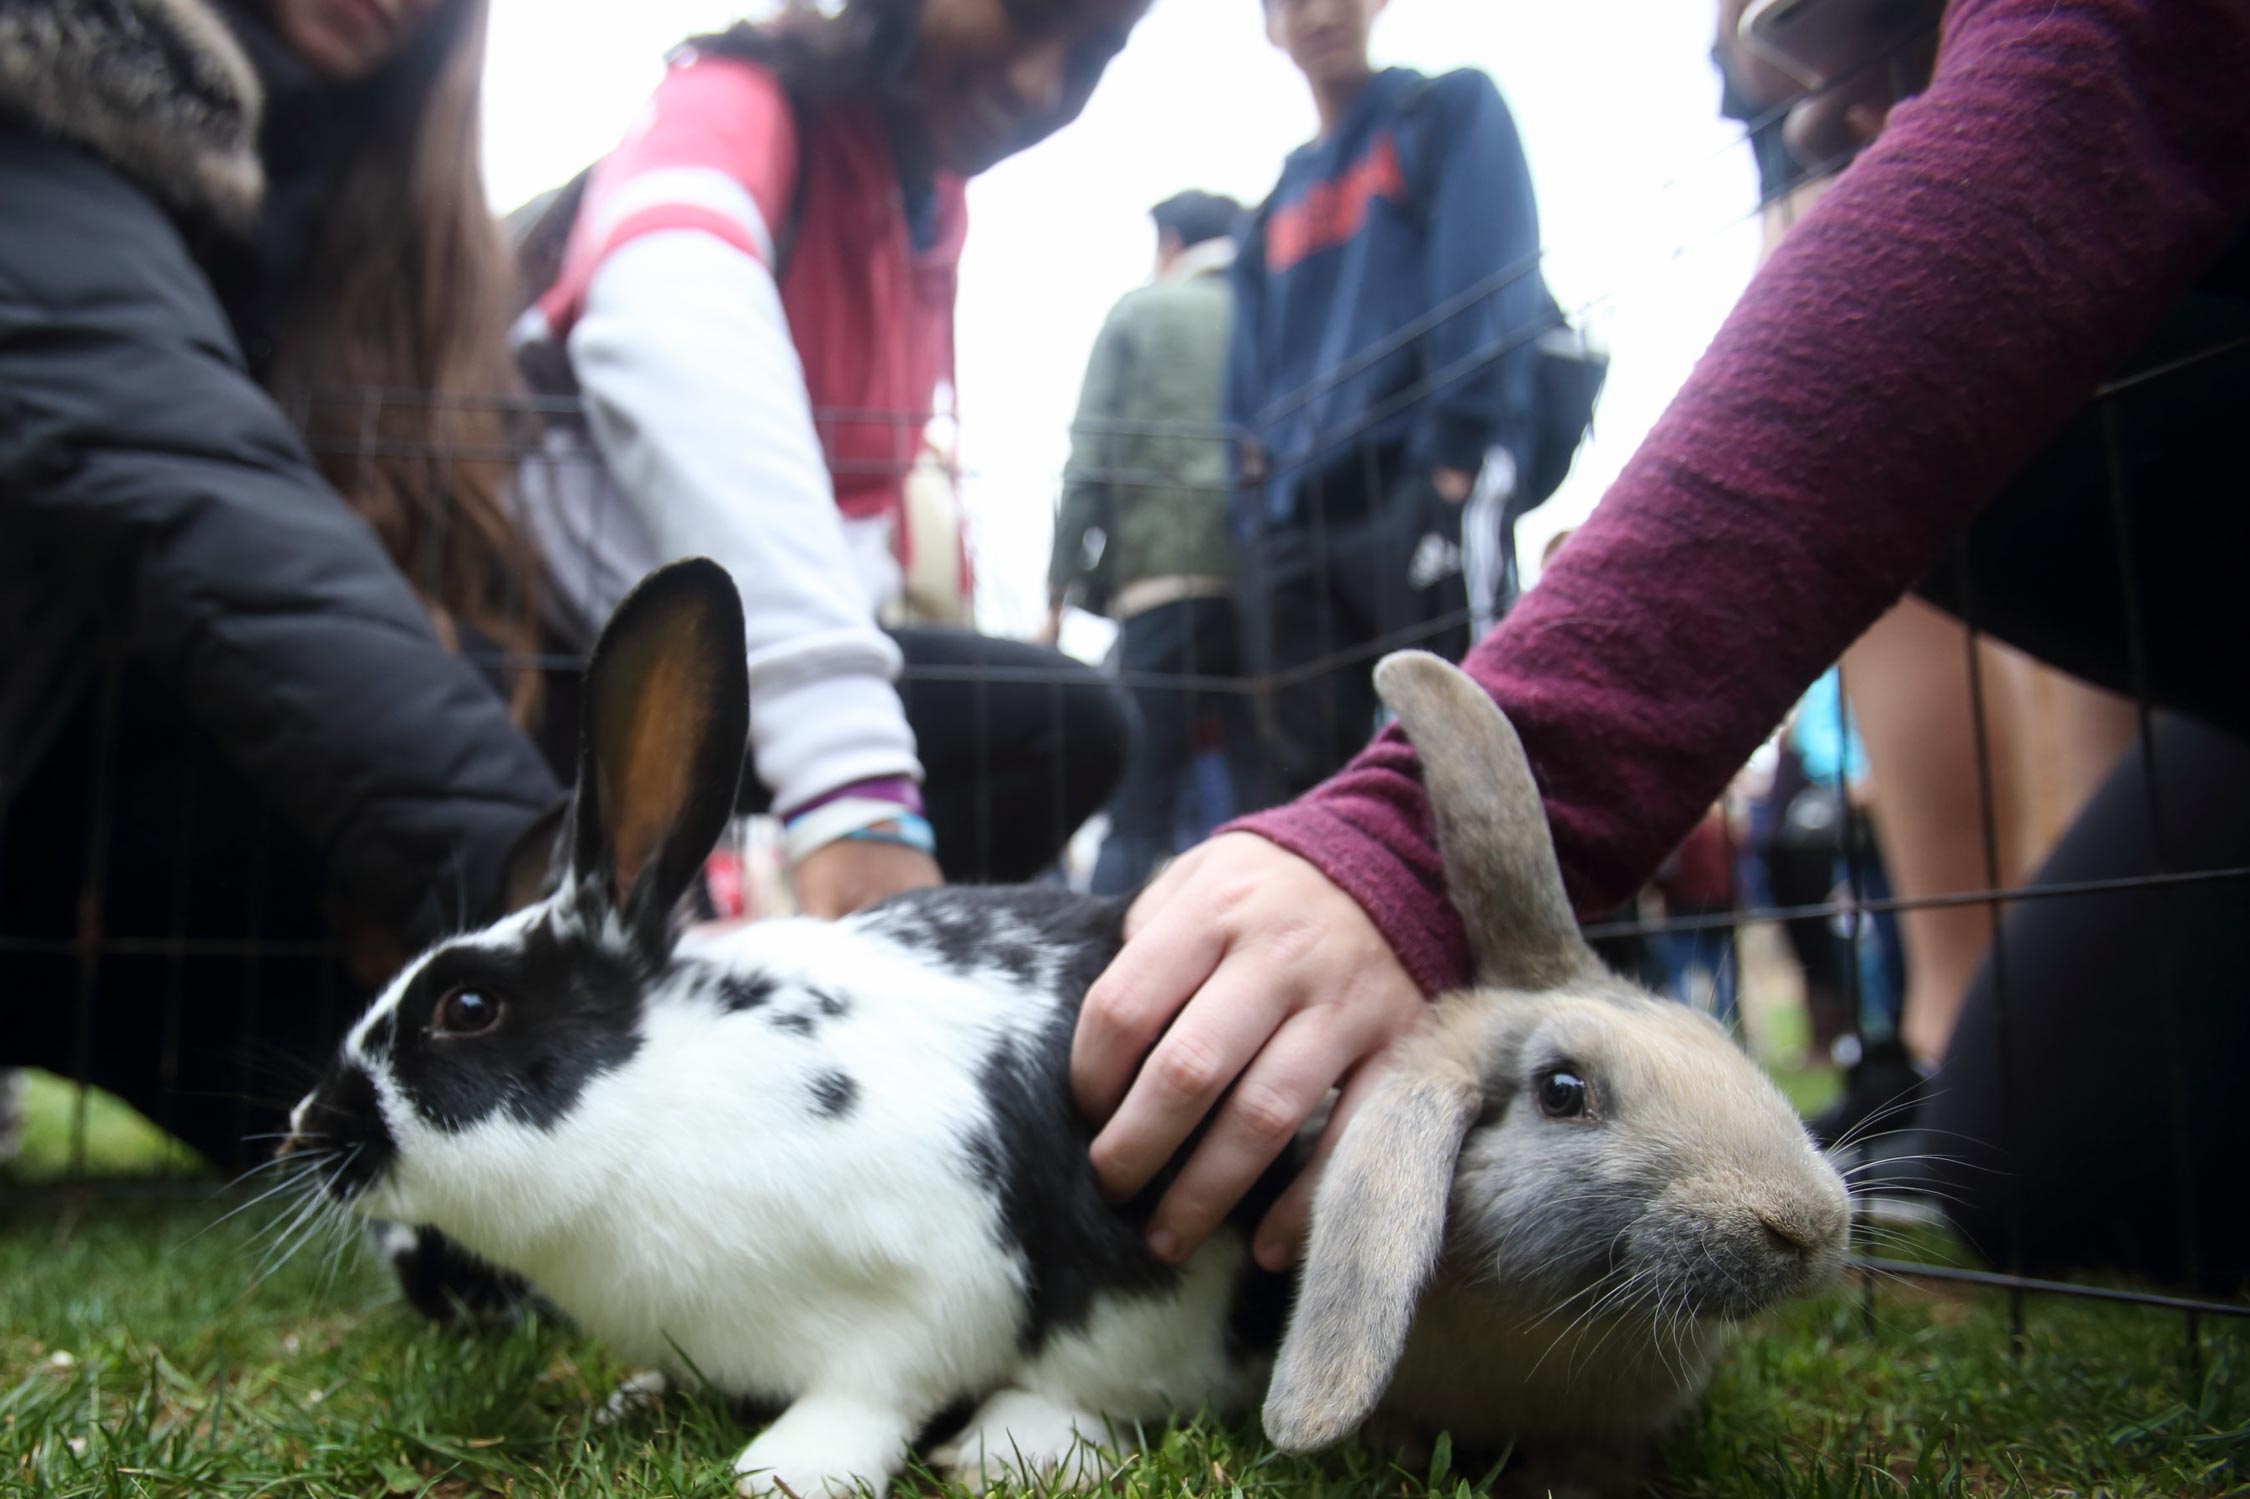 Students rubbing bunnies